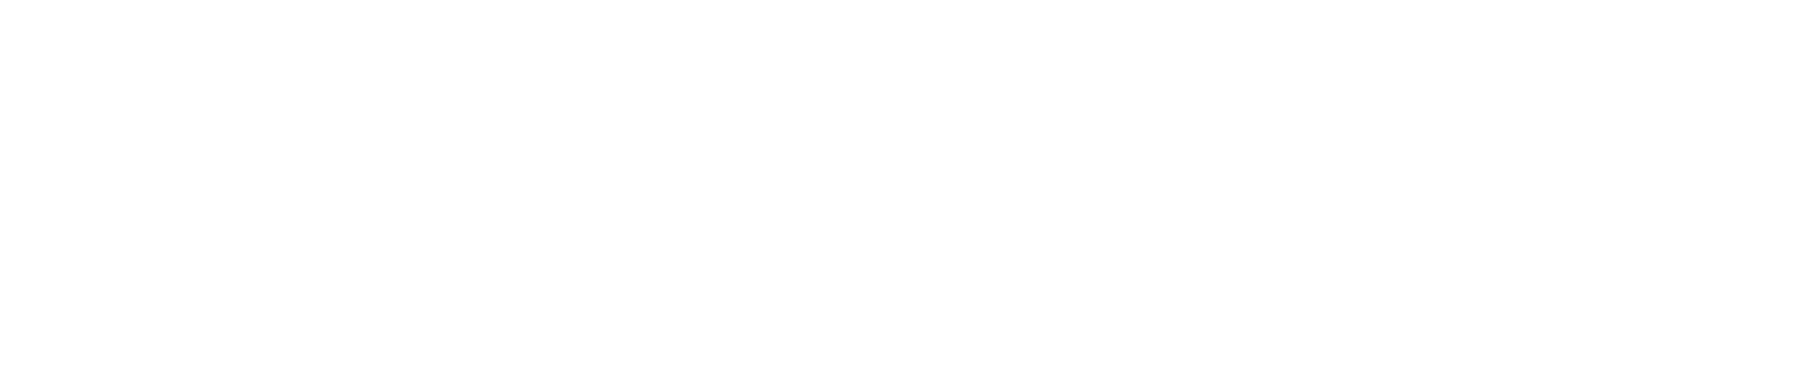 The Republic Banking Company logo, white